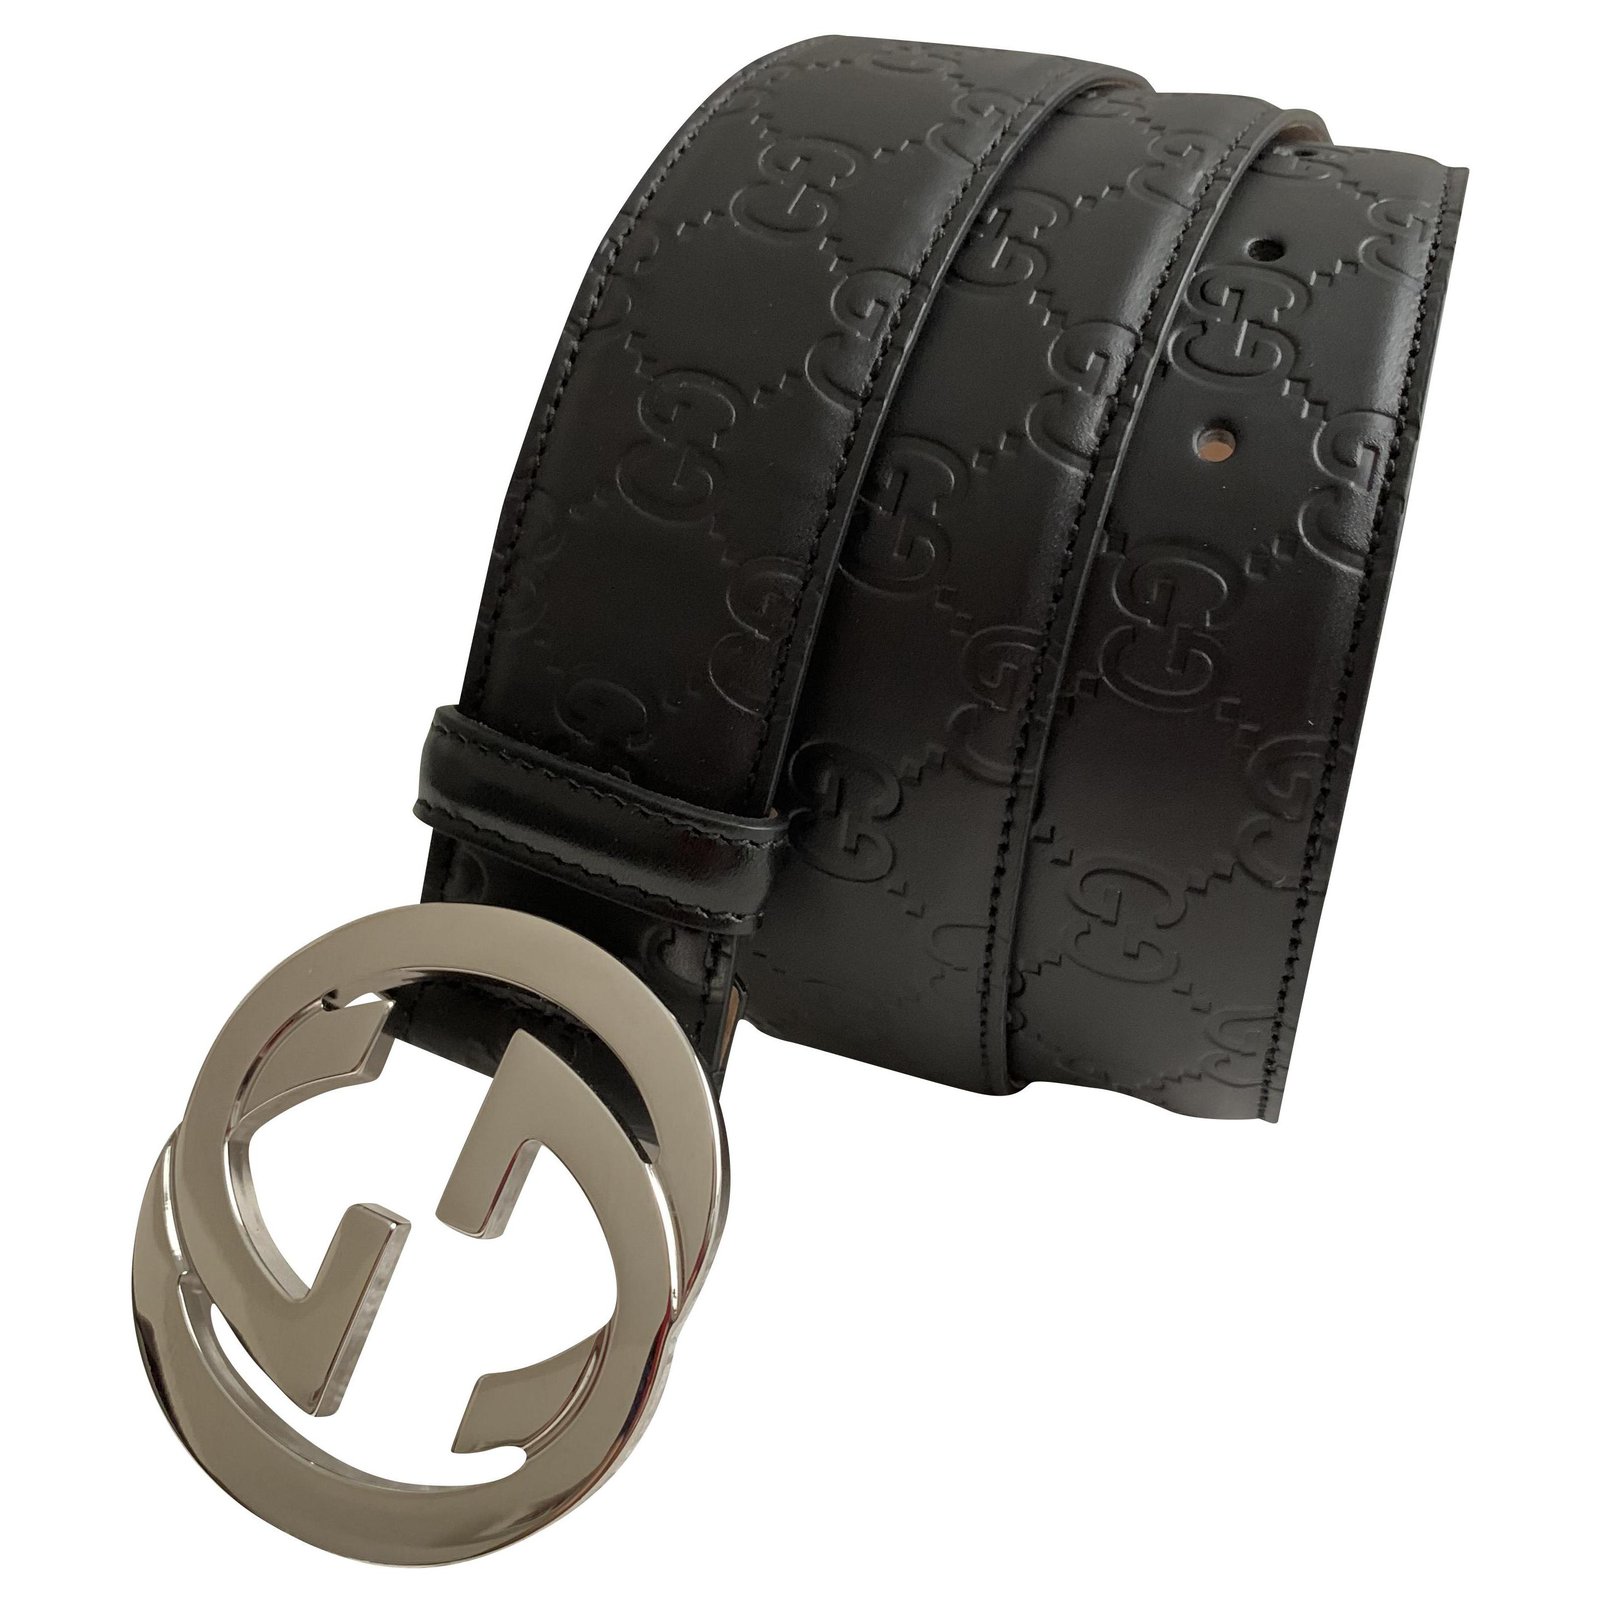 gucci signature leather belt black